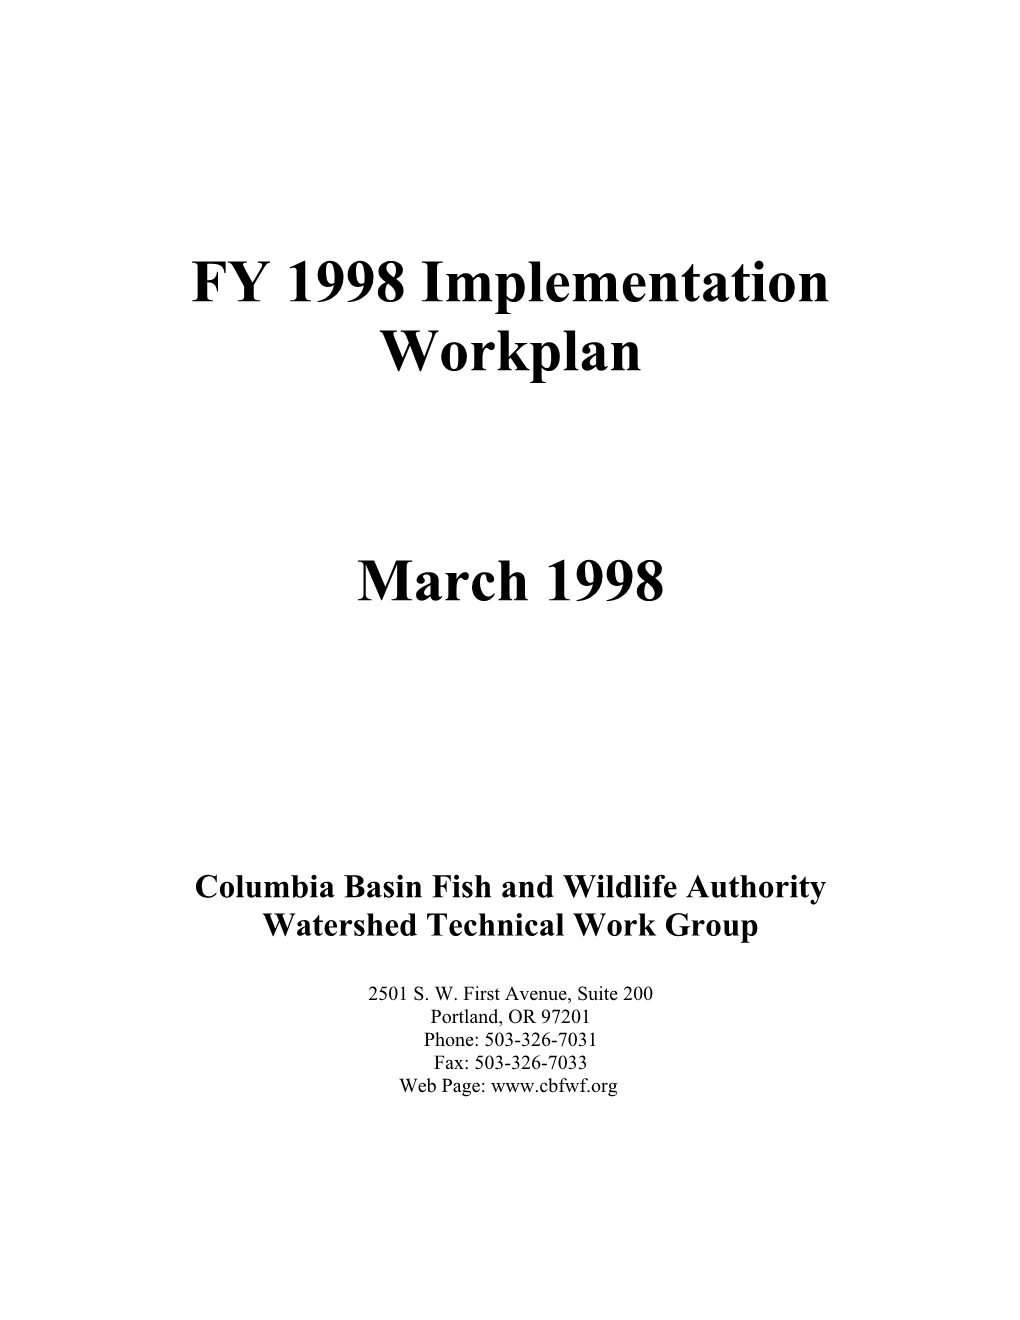 DRAFT FY 1998 Implementation Workplan